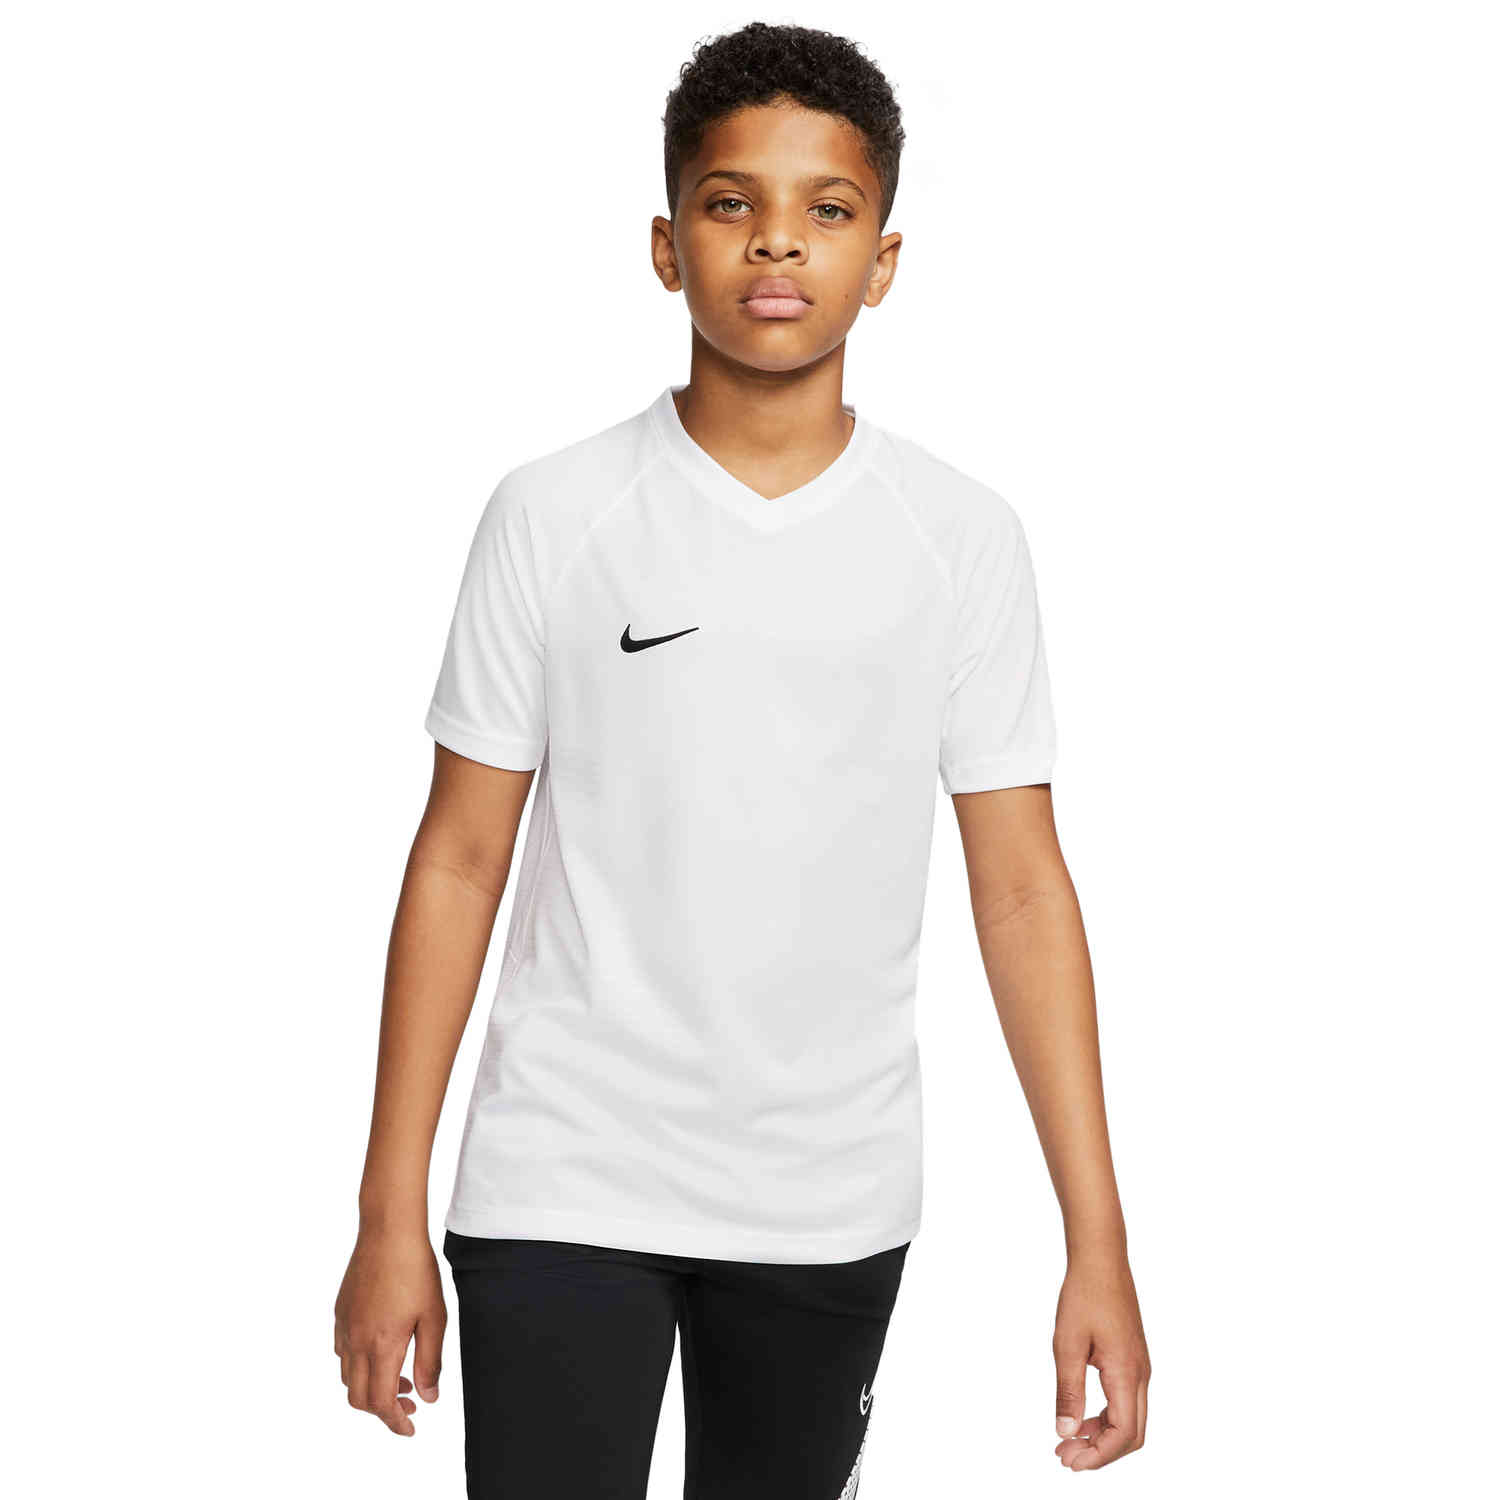 Kids Nike Tiempo Premier Team Jersey - White - Soccer Master